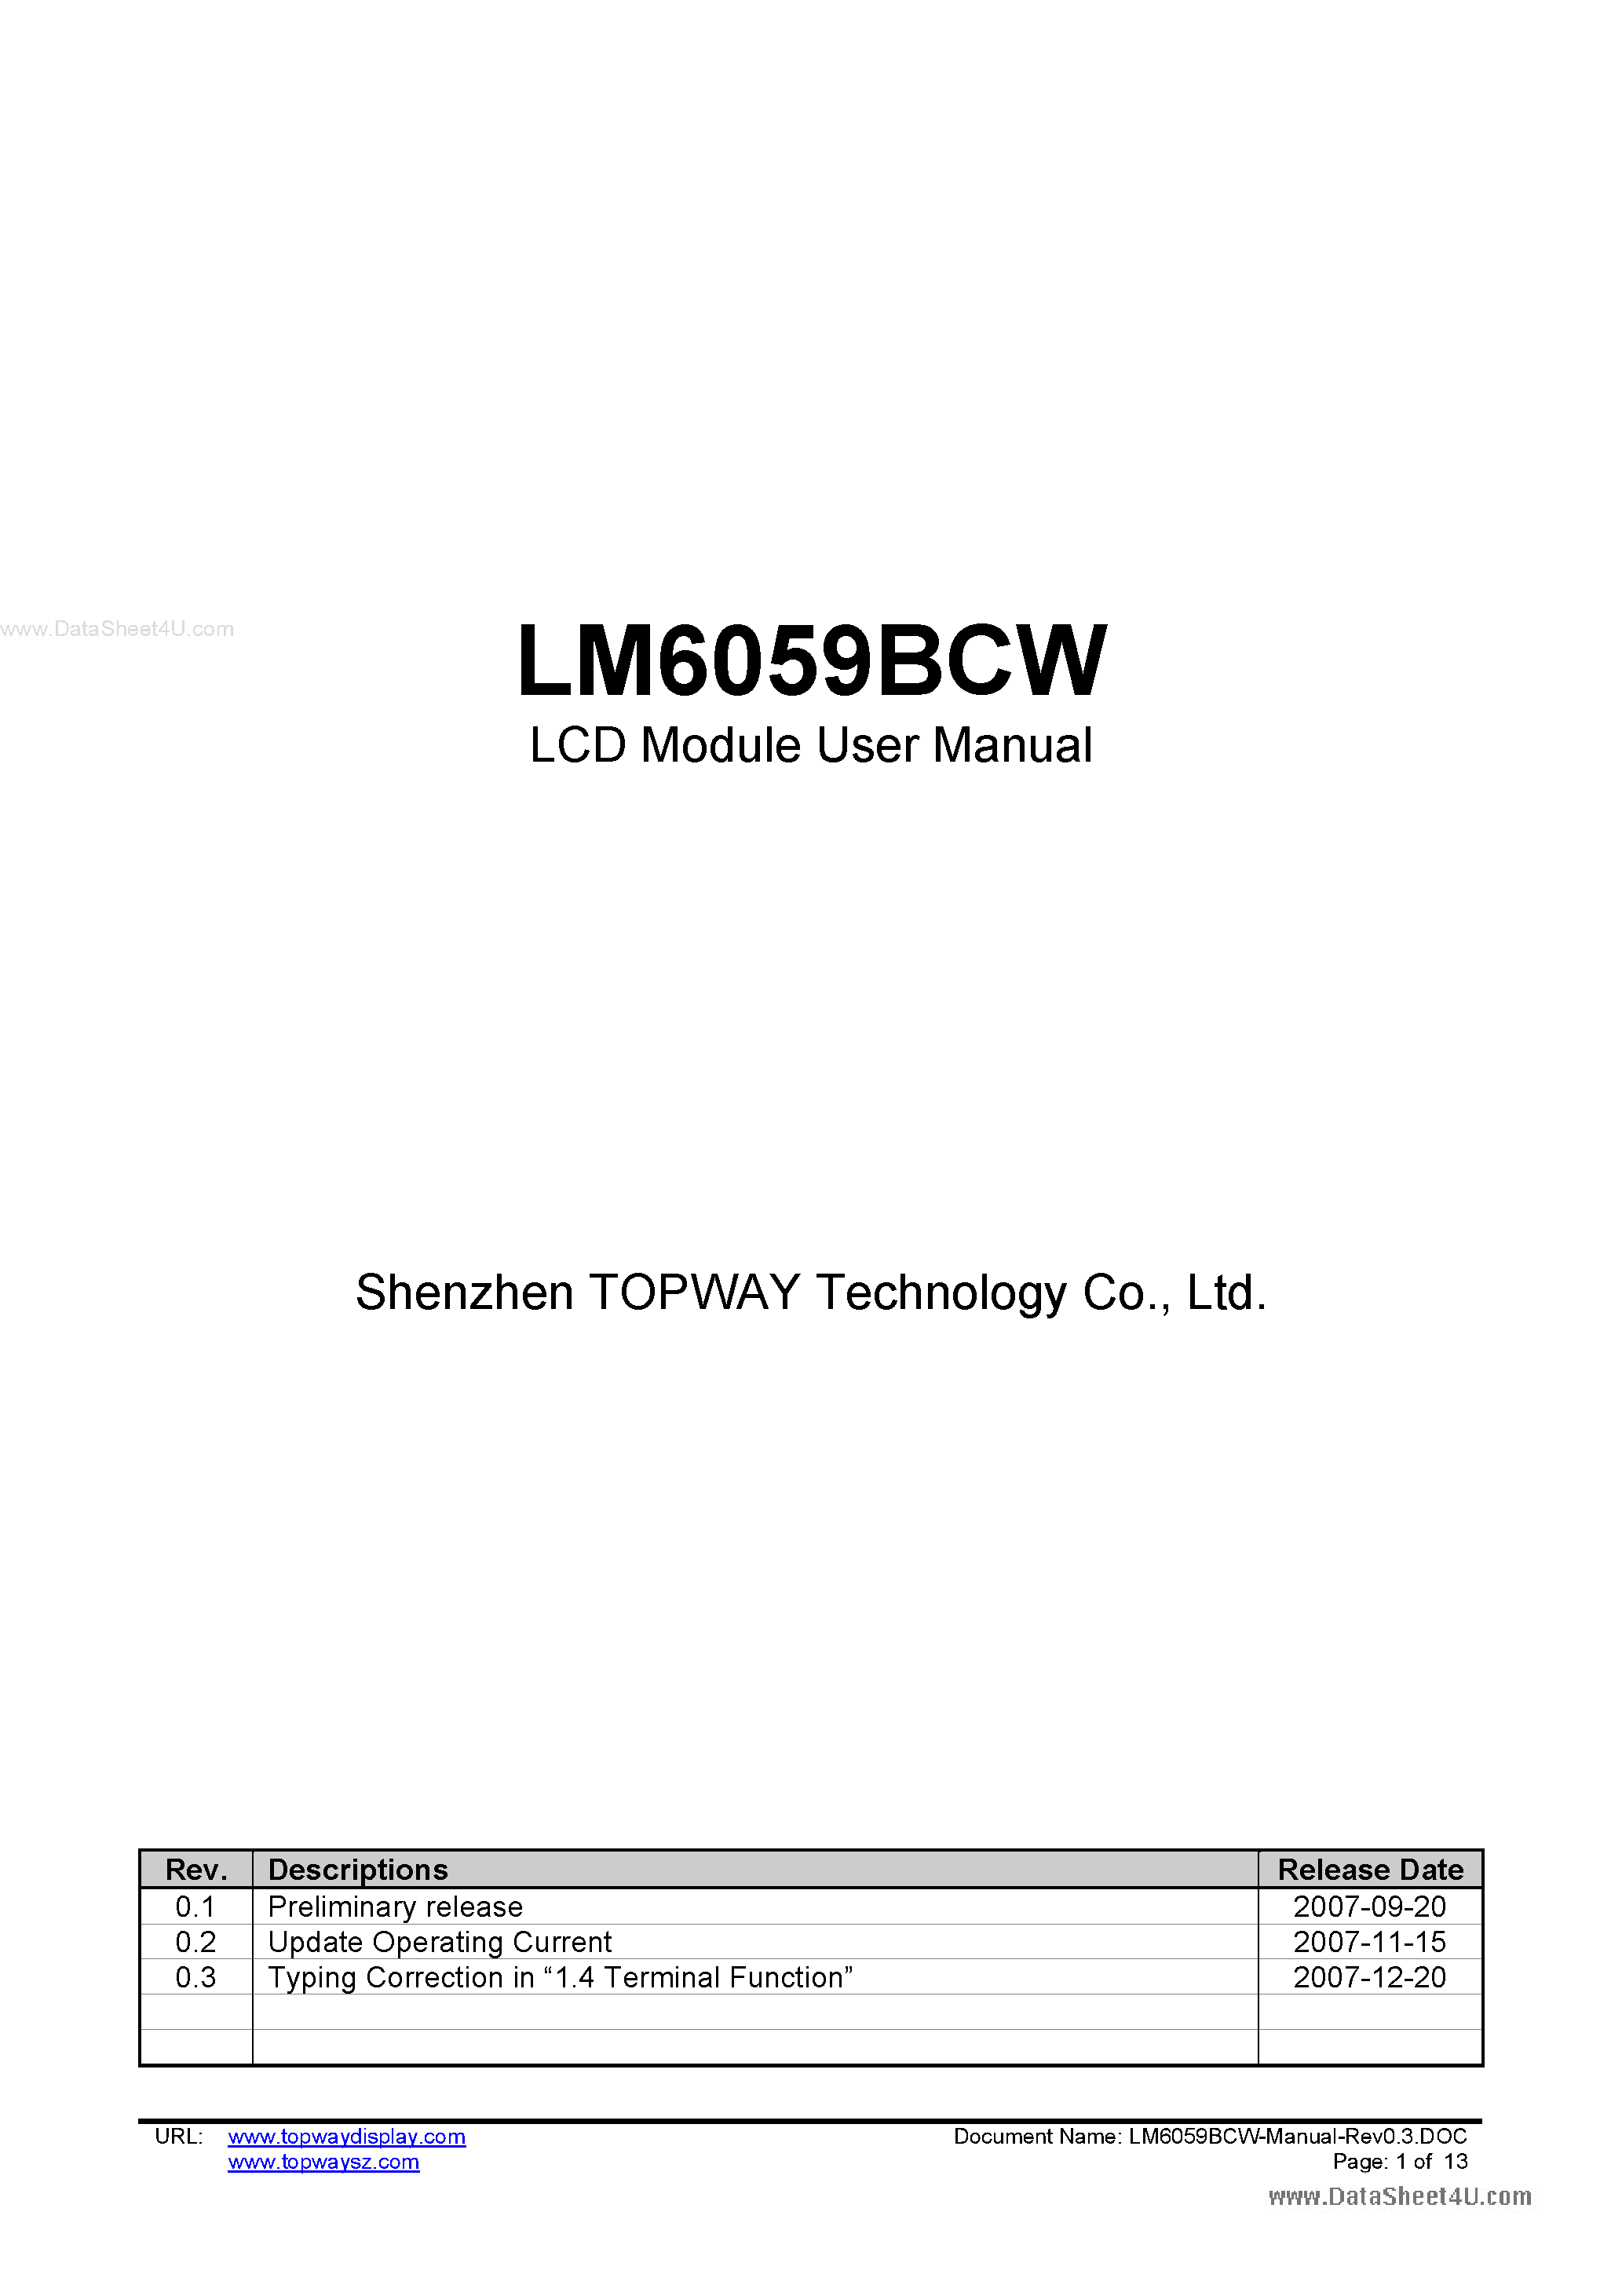 Даташит LM6059BCW - LCD Module страница 1